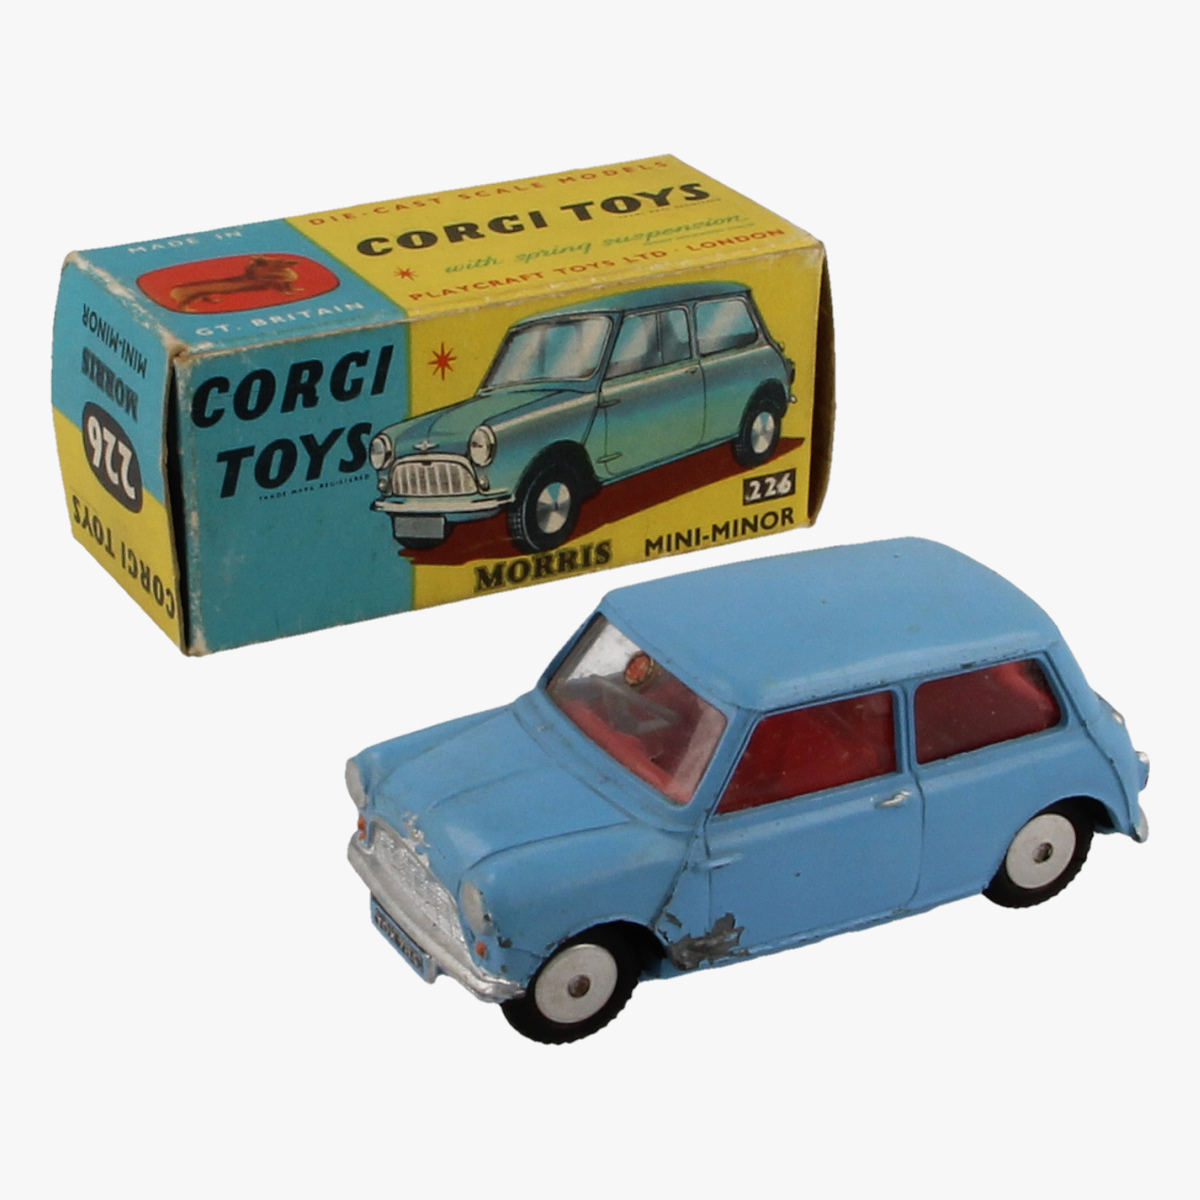 Afbeeldingen van Corgi Toys. Morris Mini - Minor 226